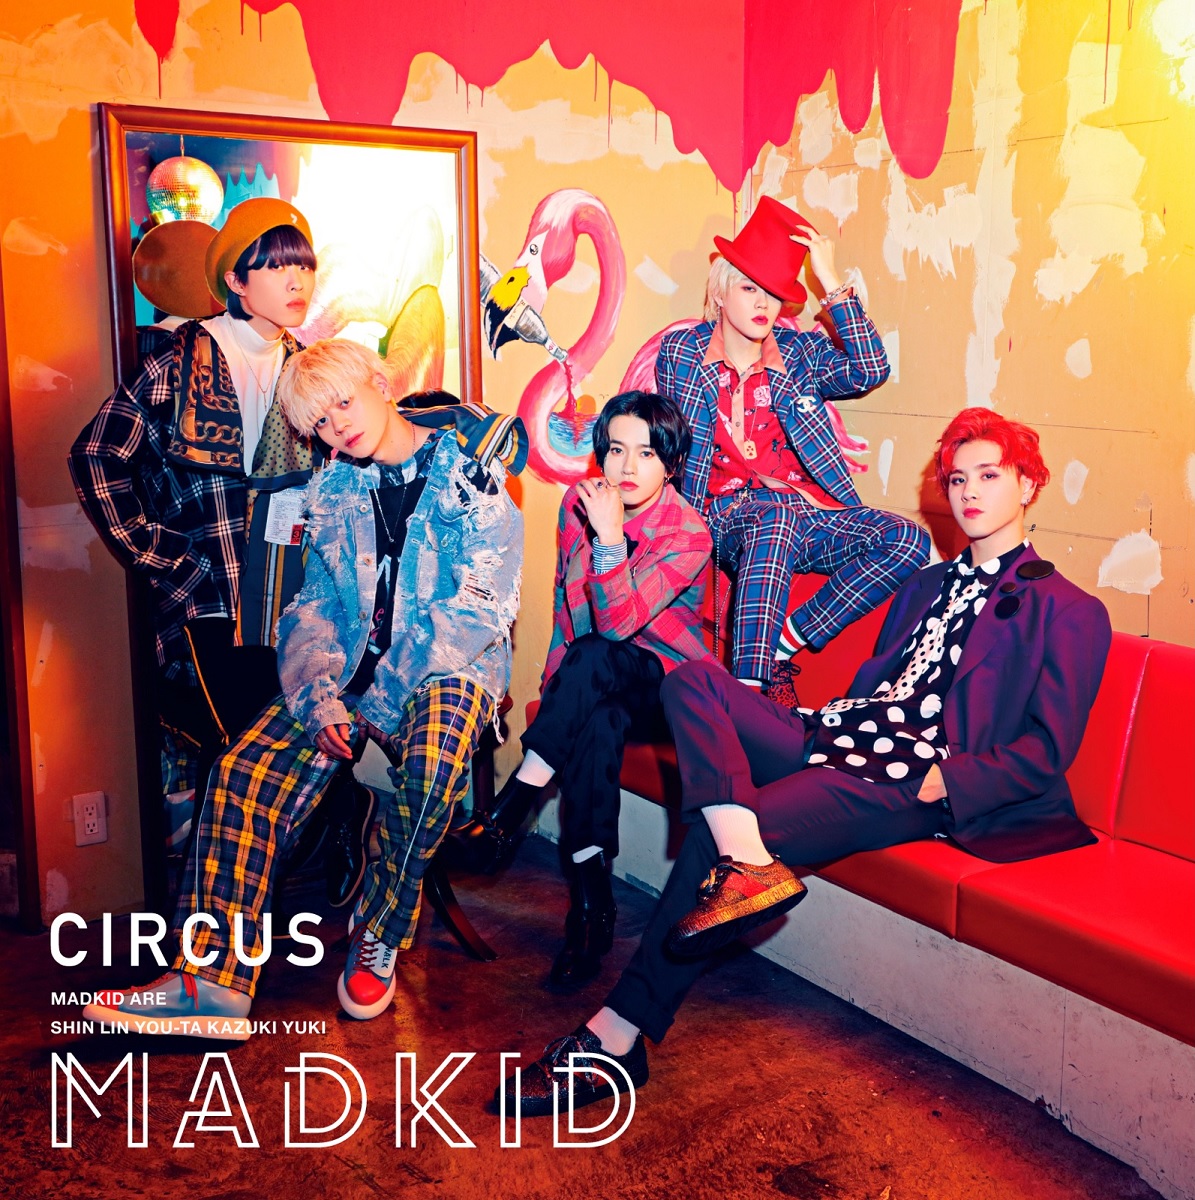 『MADKID - Never going back 歌詞』収録の『CIRCUS』ジャケット